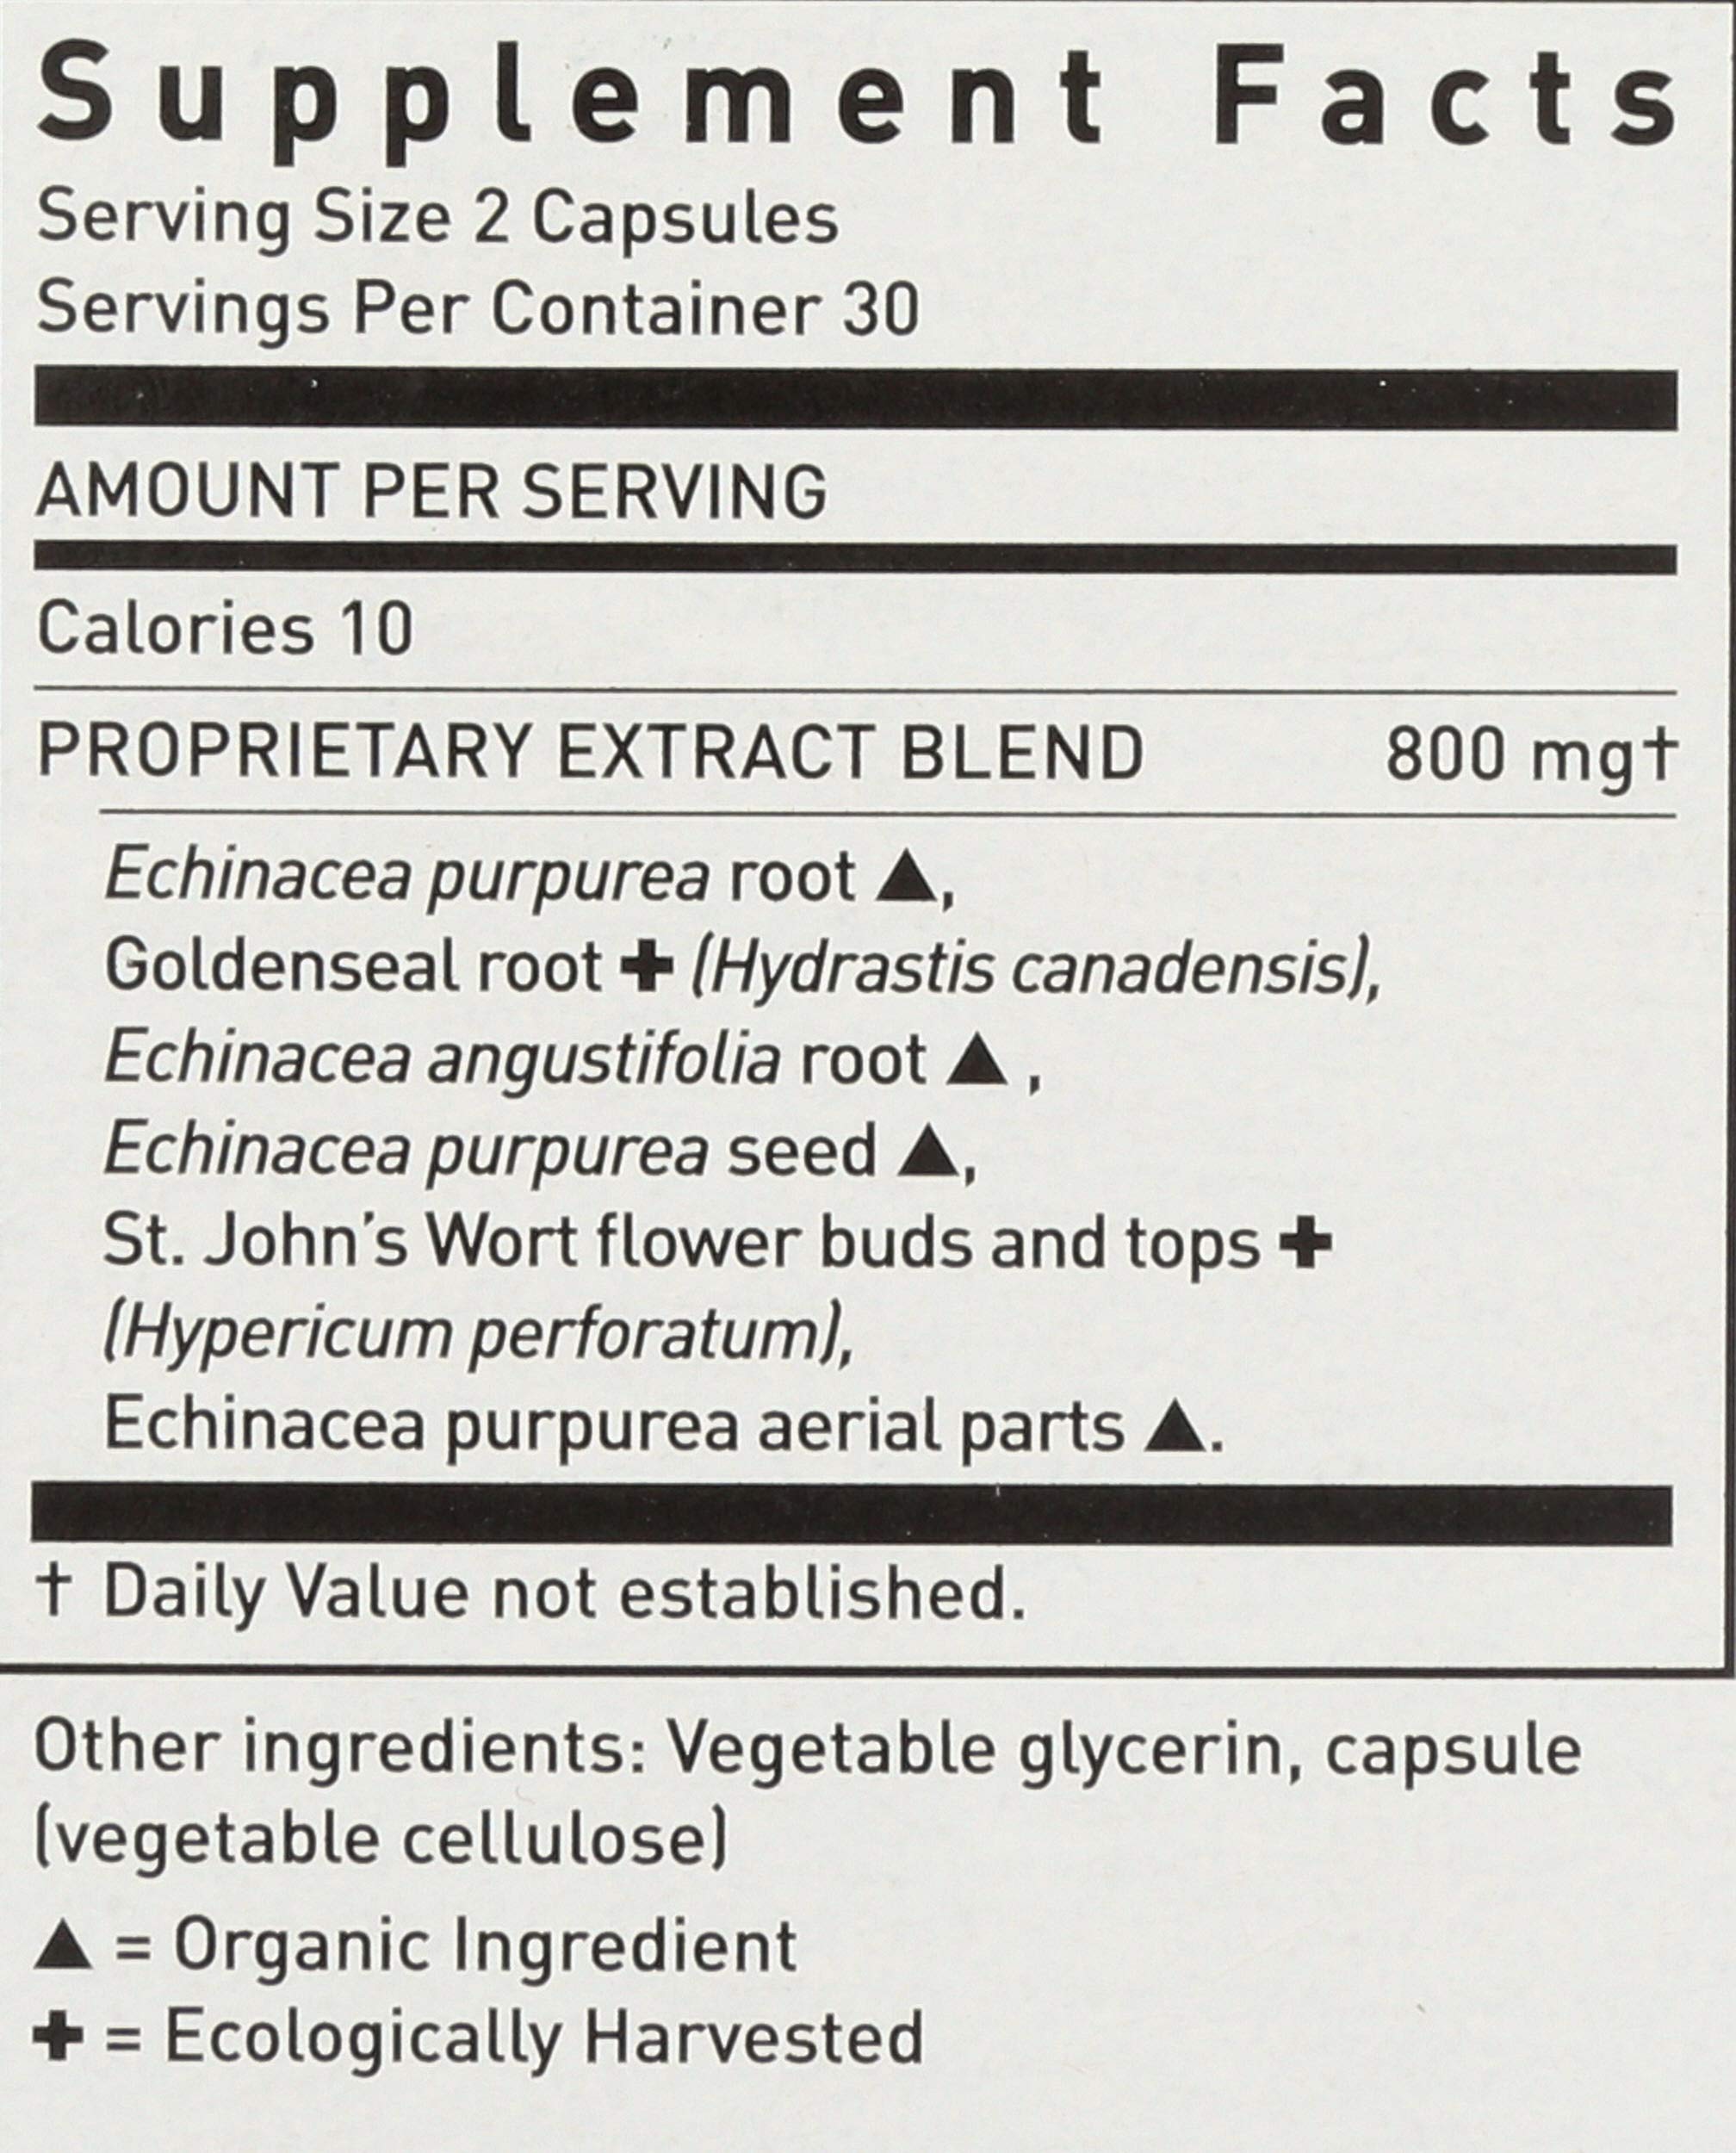 Echinacea Goldenseal 60 caps